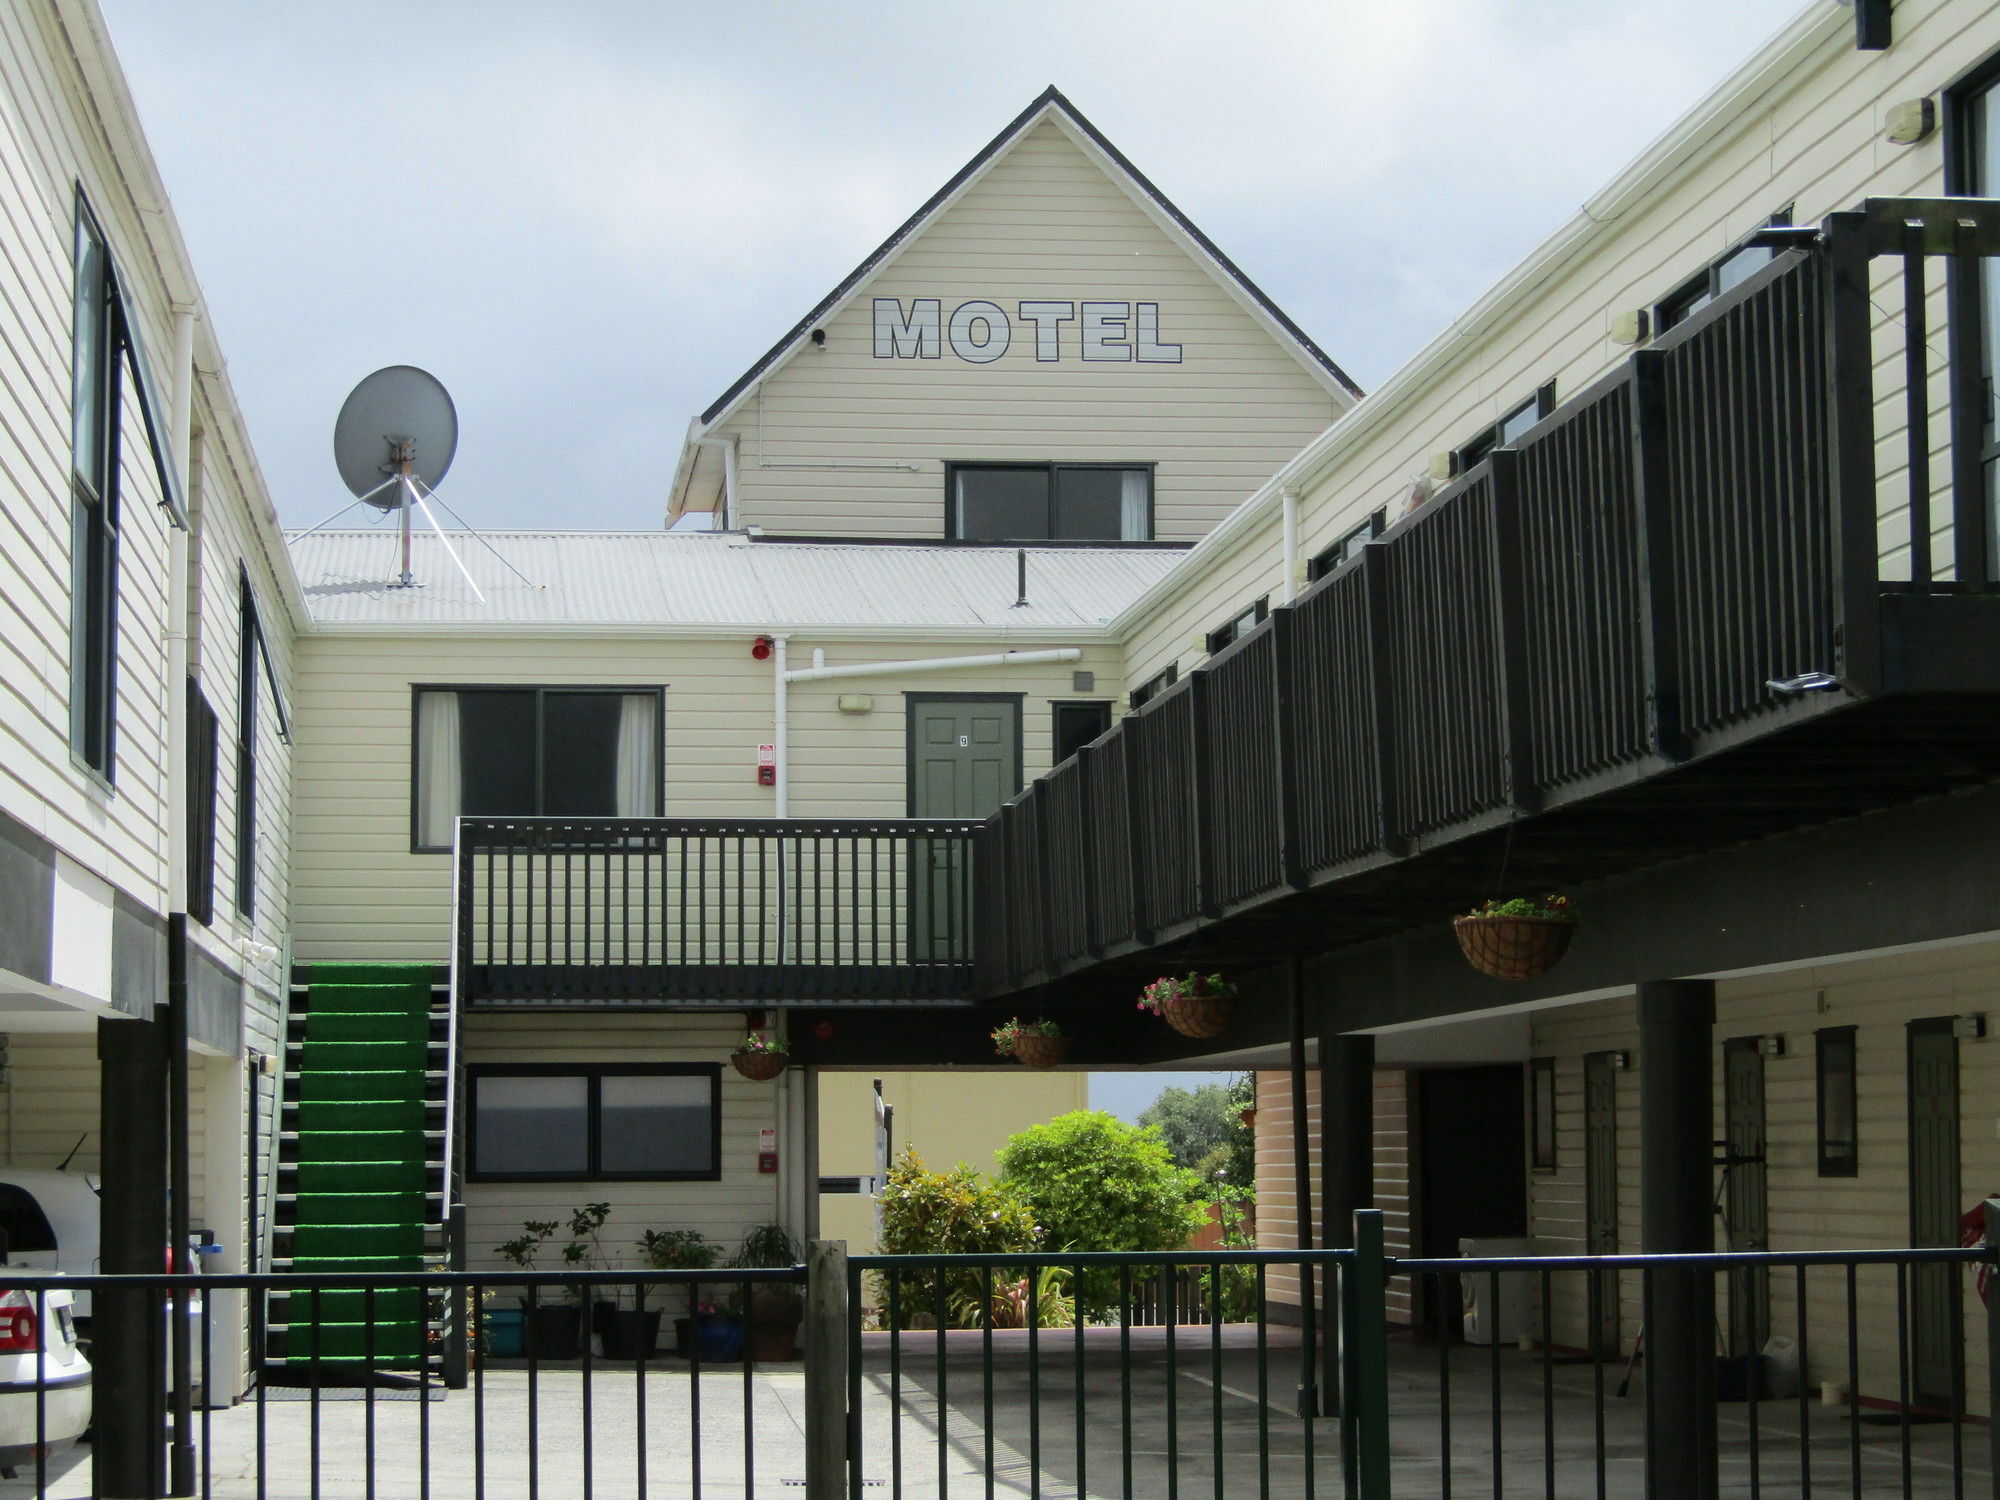 Pohutu alojamiento Hotel Rotorua Exterior foto